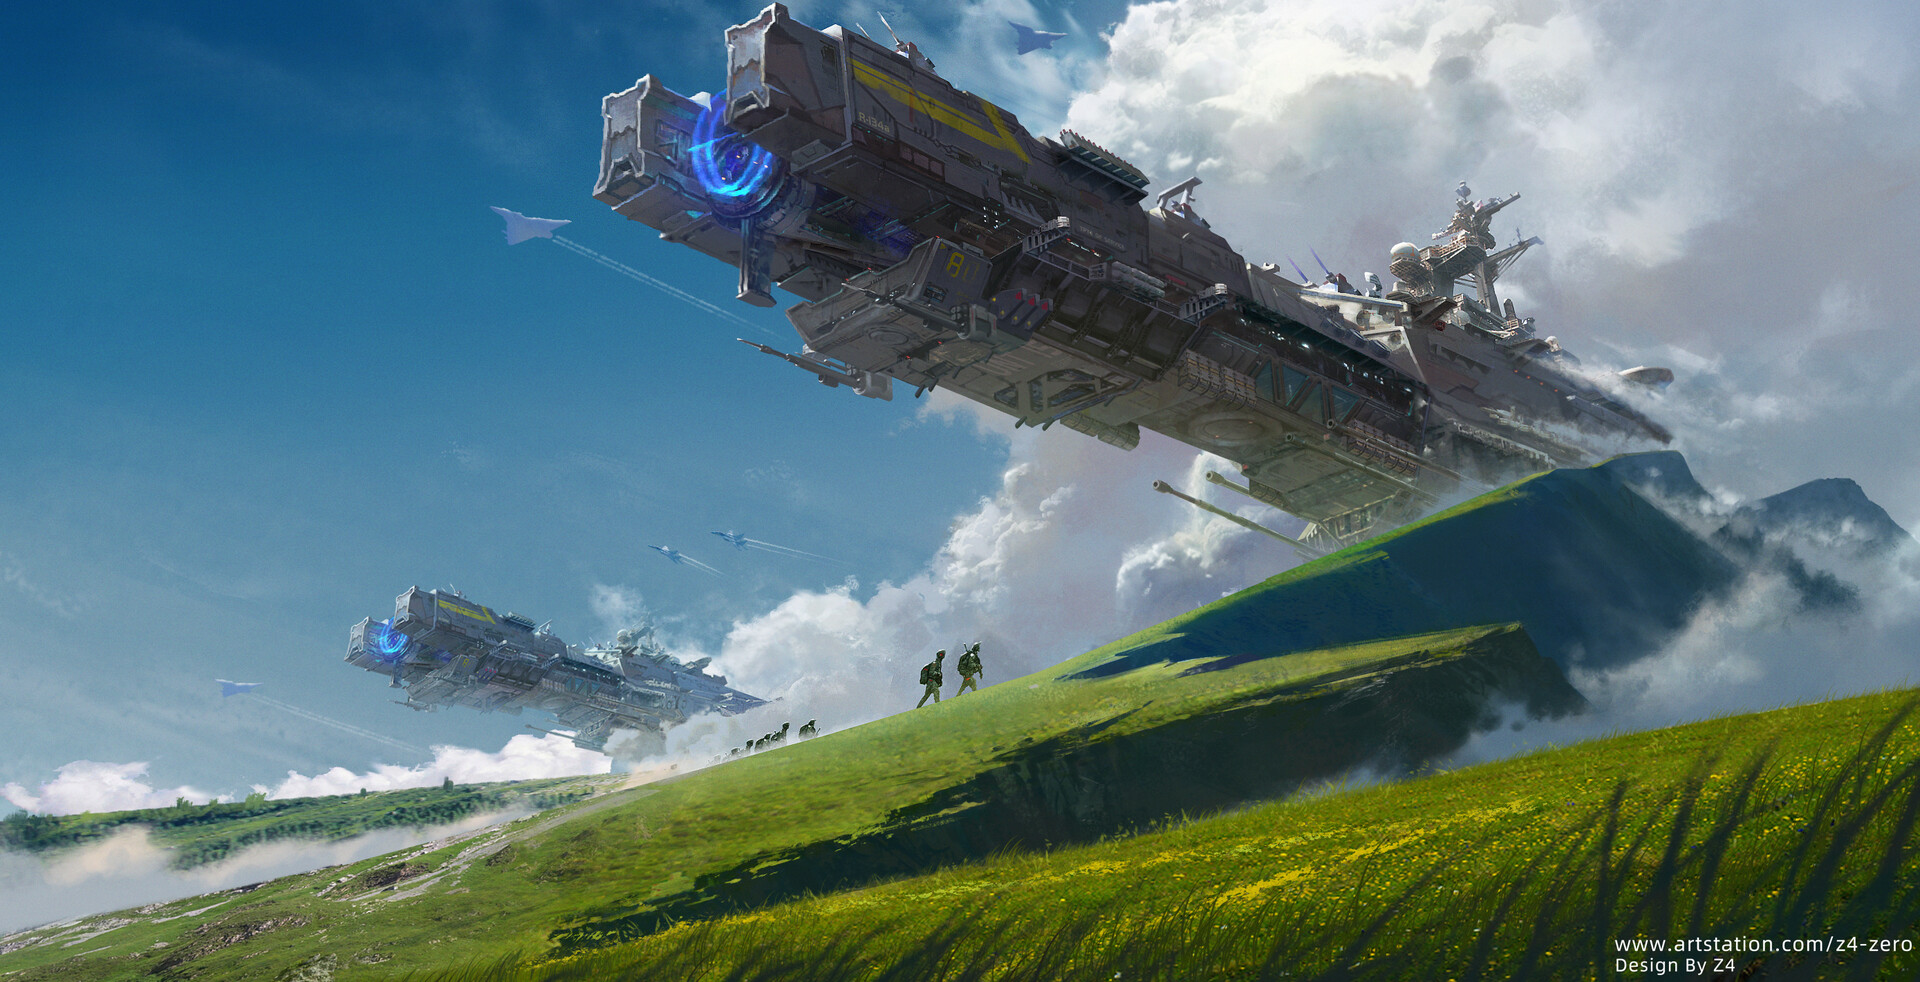 General 1920x982 digital art fantasy art environment landscape clouds science fiction spaceship Z 4-zero